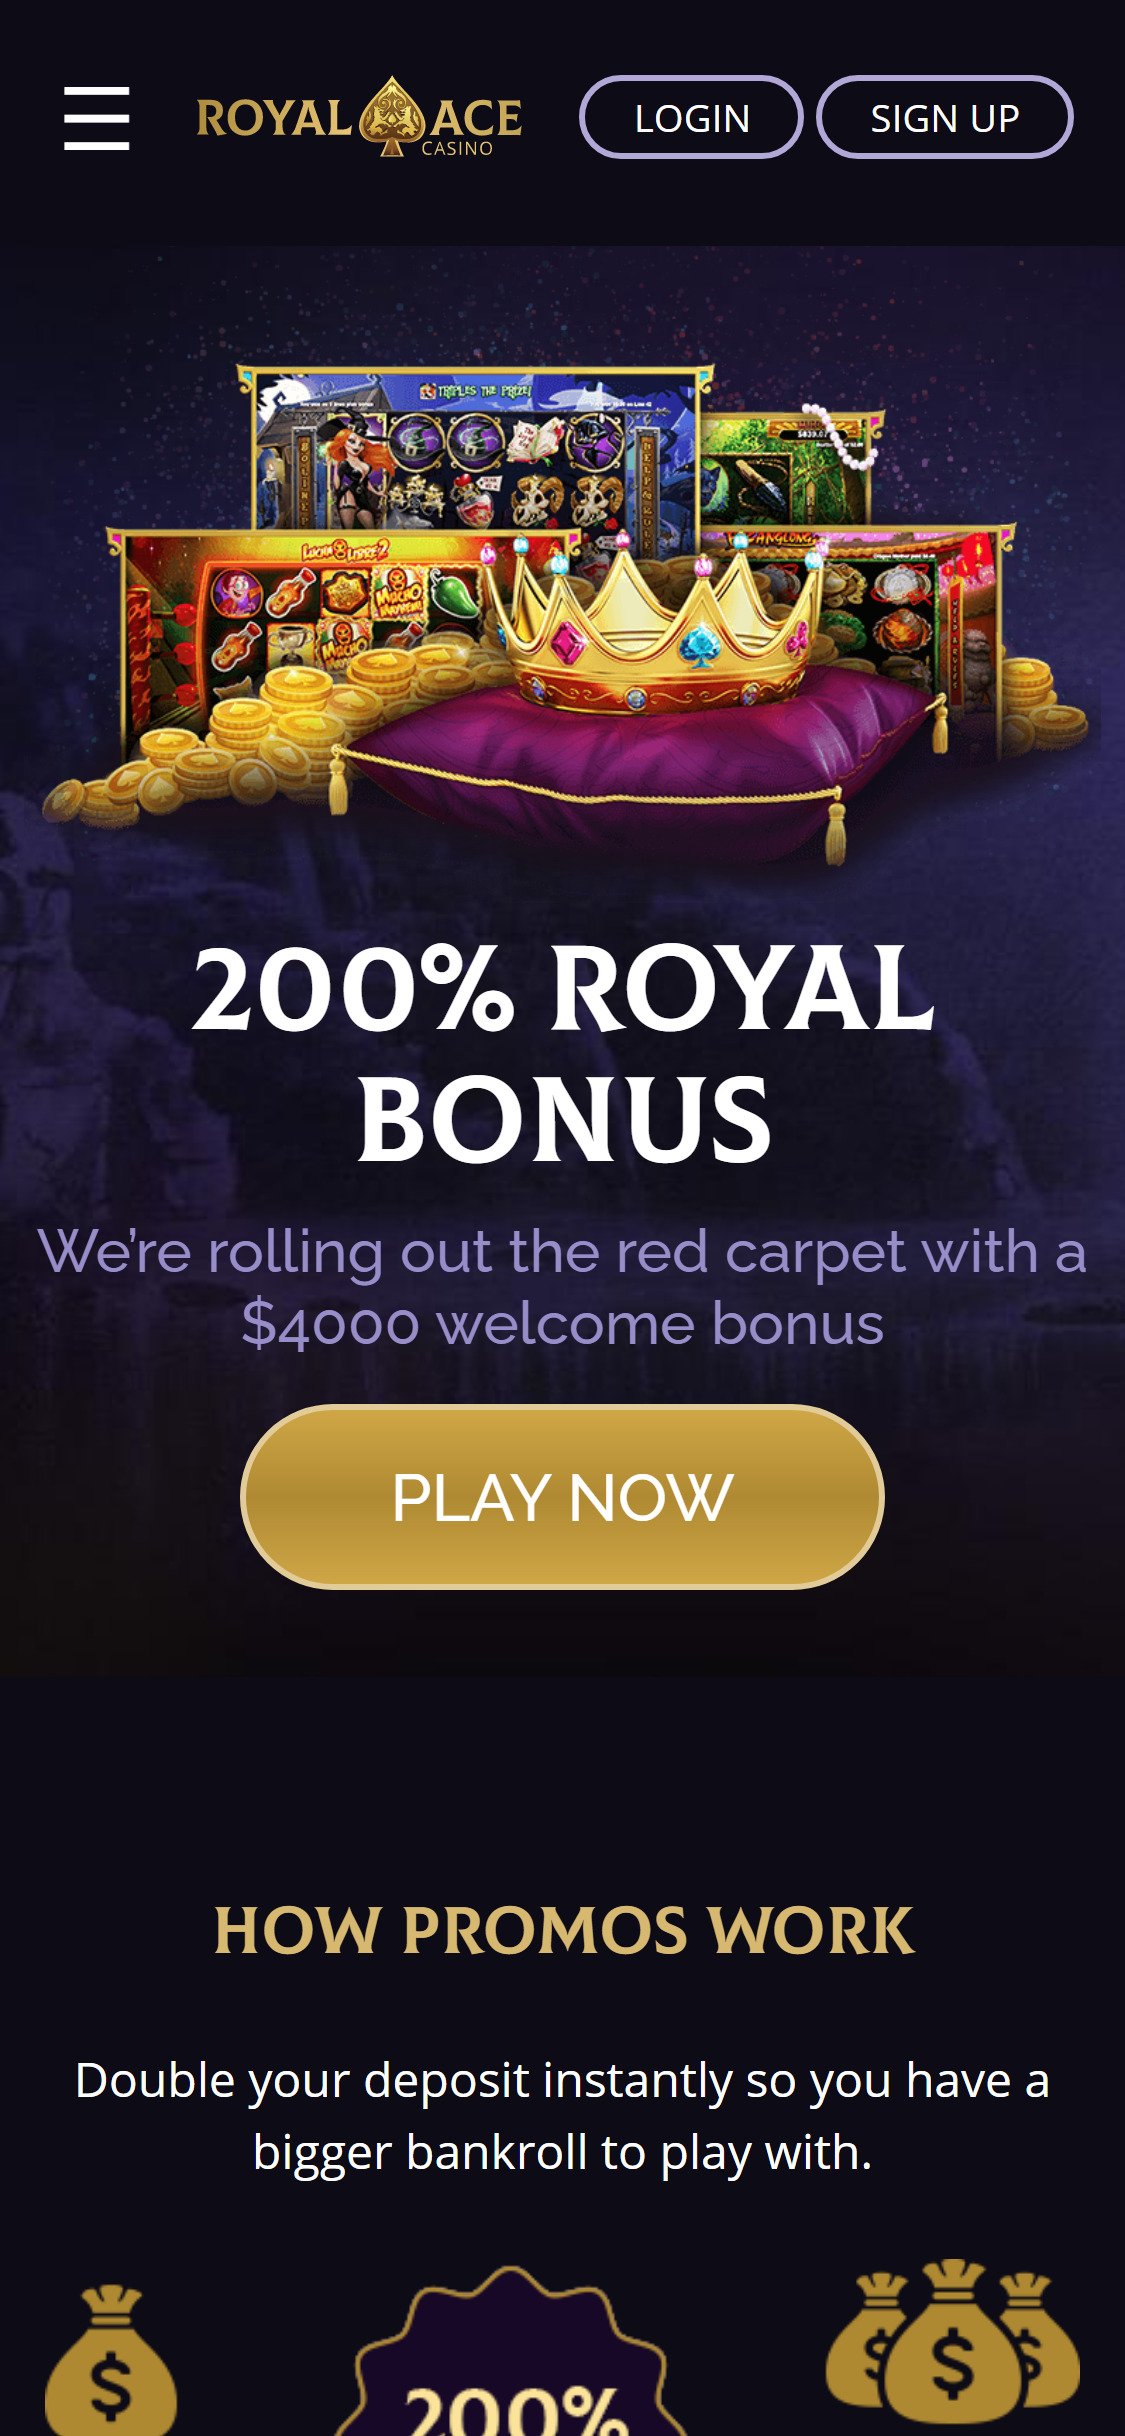 no deposit bonus royal ace casino